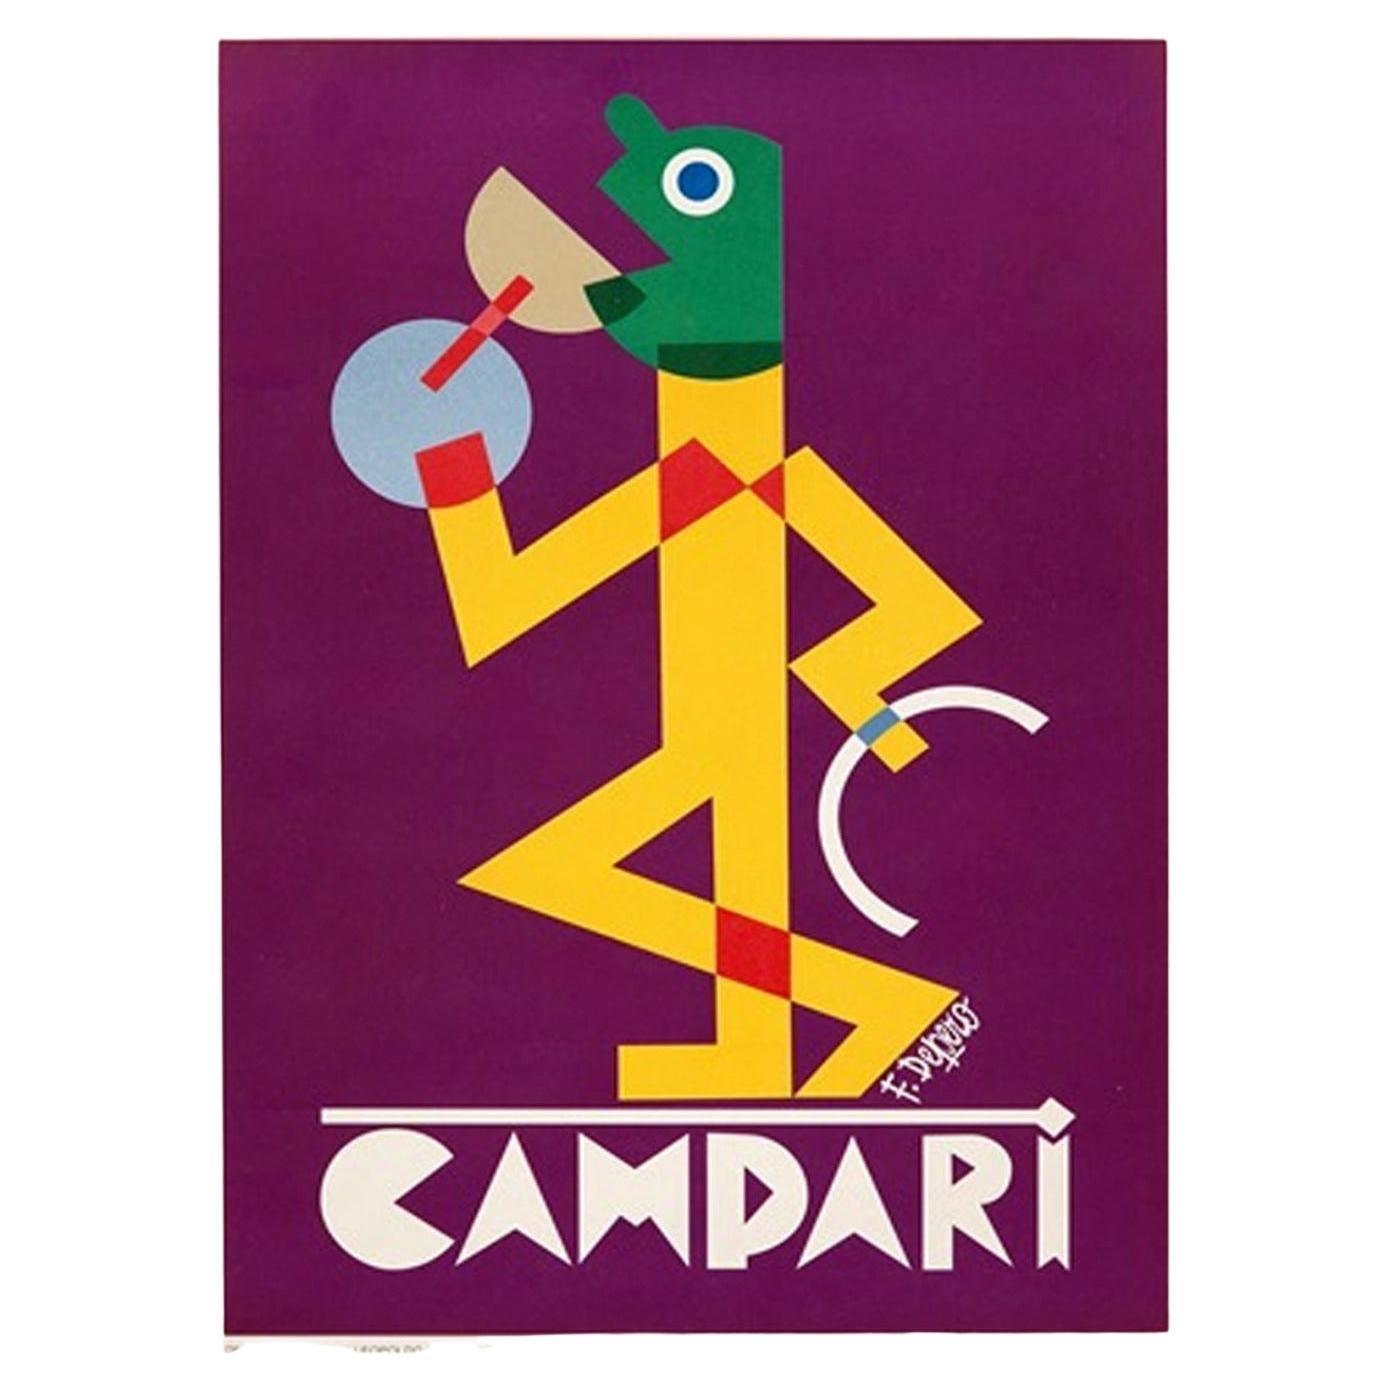 Affiche vintage d'origine 1928 Campari Viola, Fortunato Depero